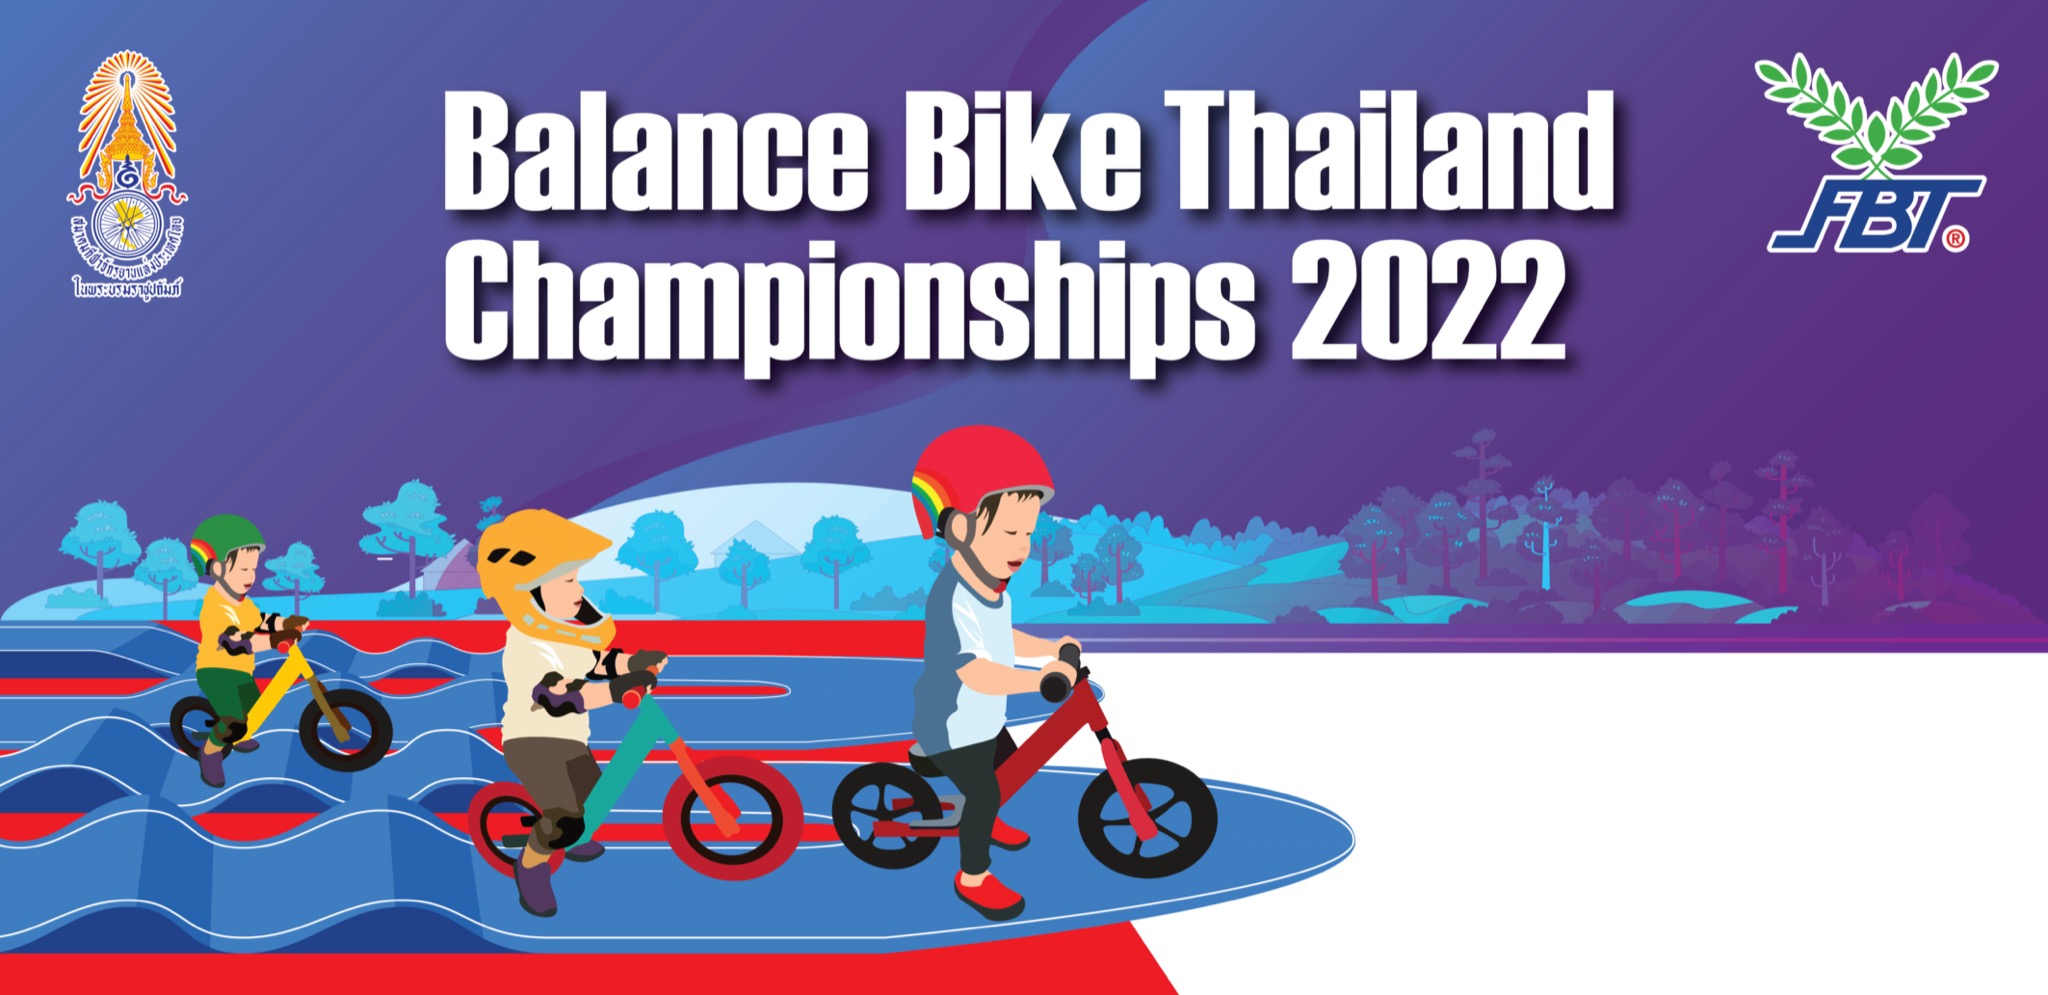 Balance Bike Thailand Championships 2022 สนามที่ 1 